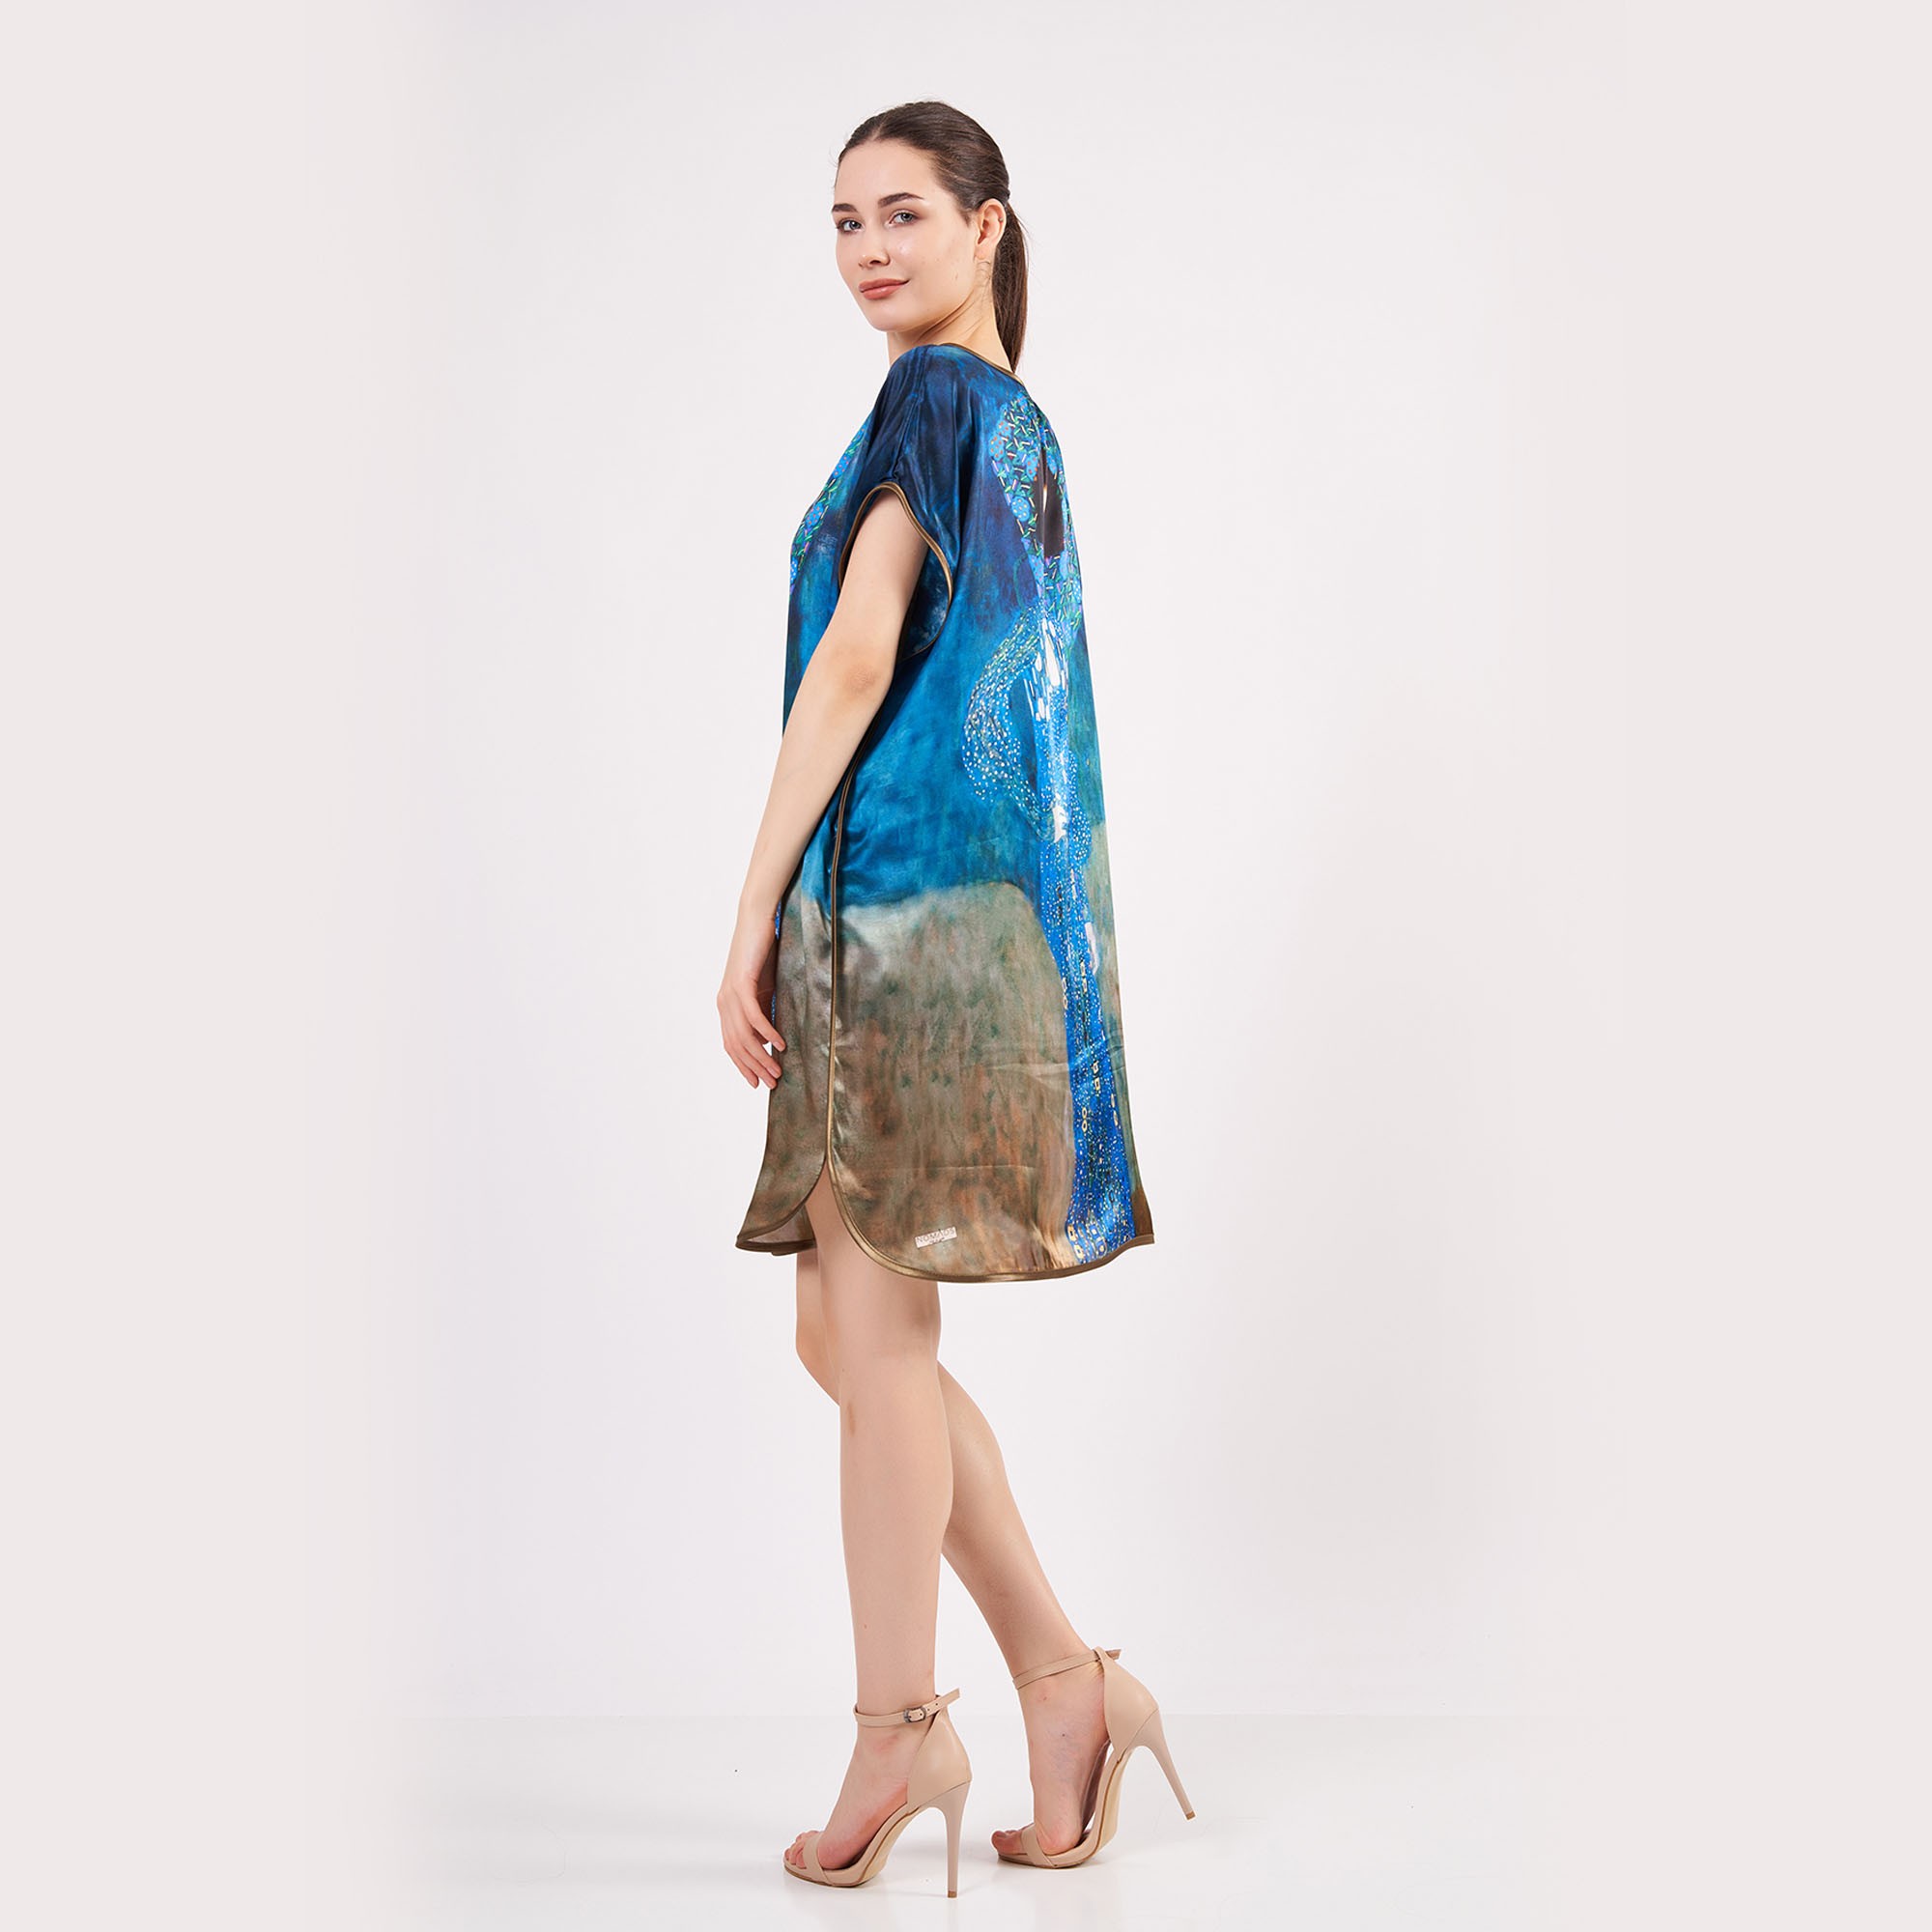 %100 Silk Plus Size Short Dress For Women | Oversized Short Kaftan Gustav Klimt Emilie Floge | Loose Fitting Dress